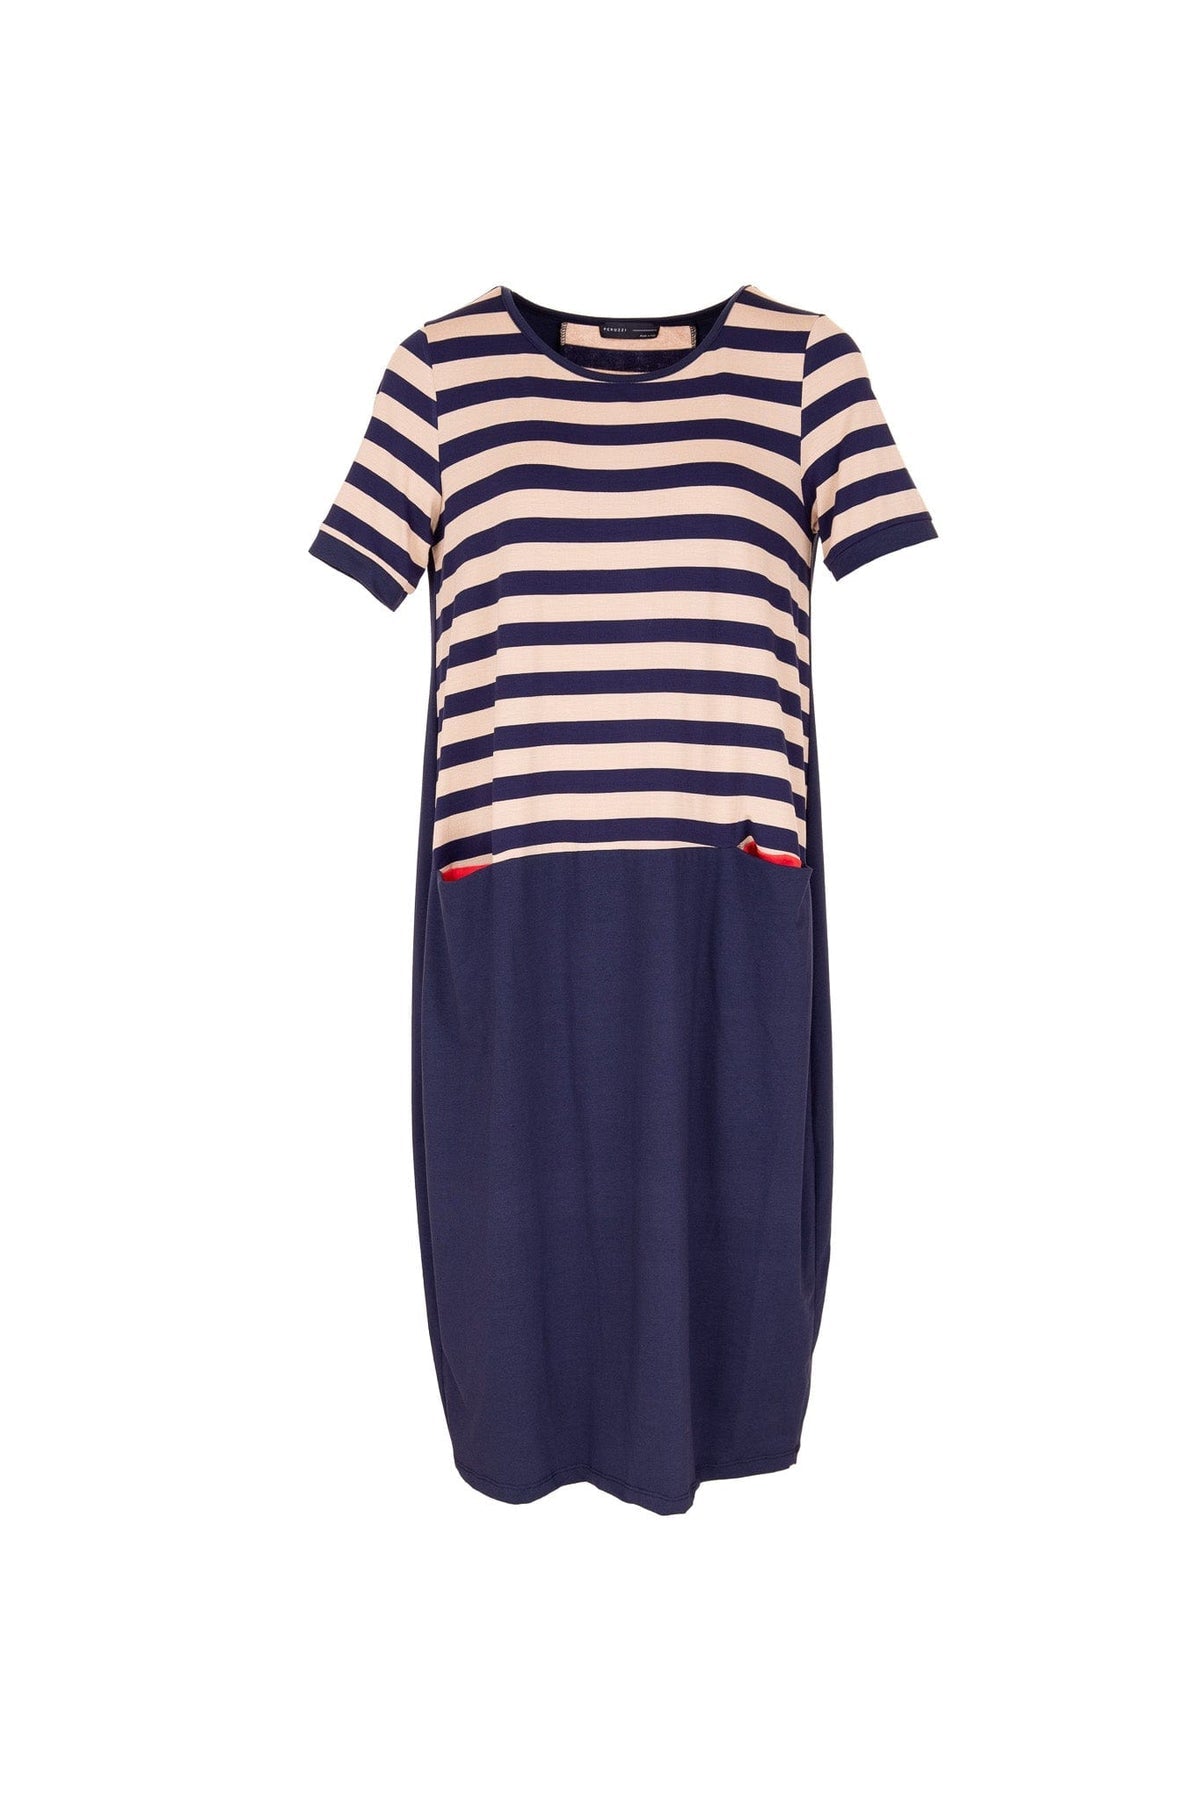 Peruzzi Stripe Dress - Contrast Pocket